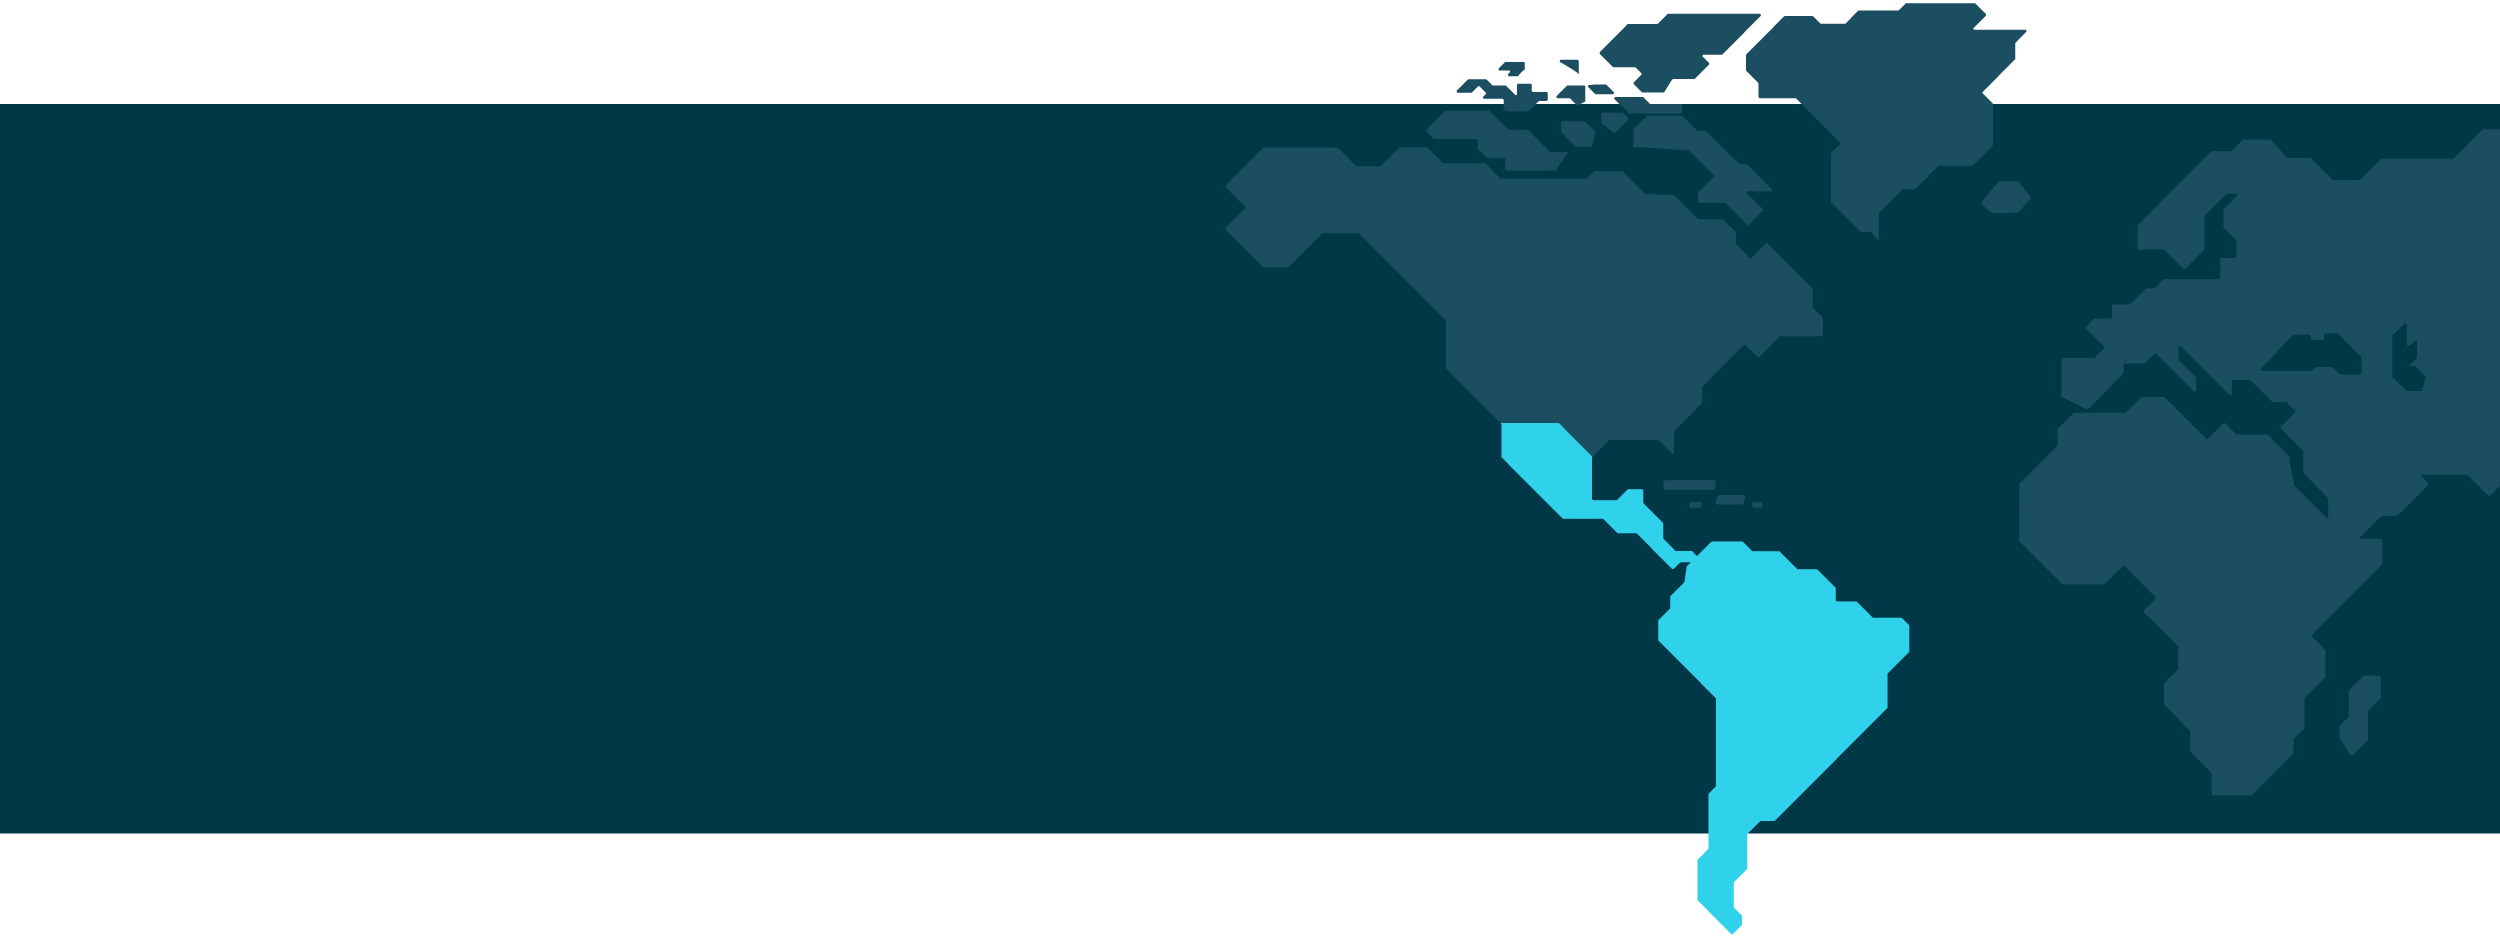 Latin America - map